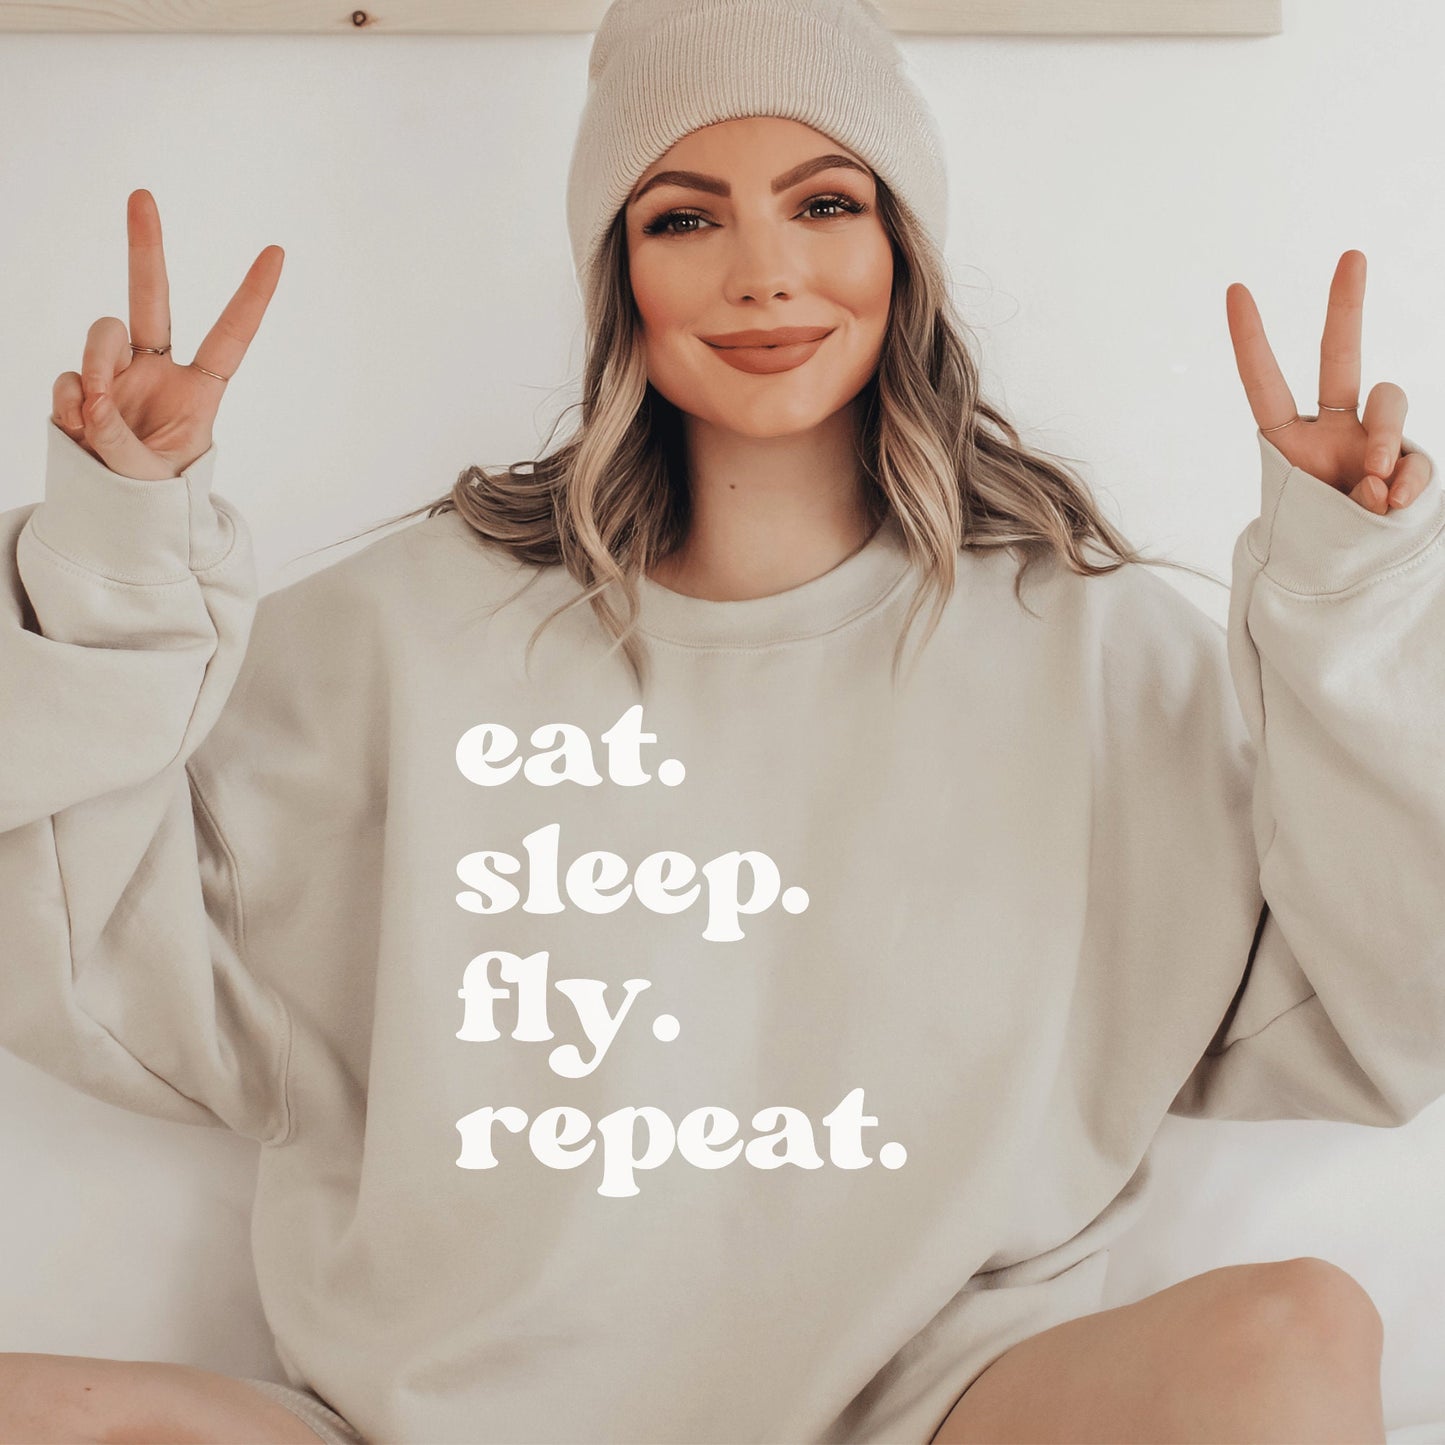 beige unisex wanderlust sweatshirt that says eat sleep fly repeat